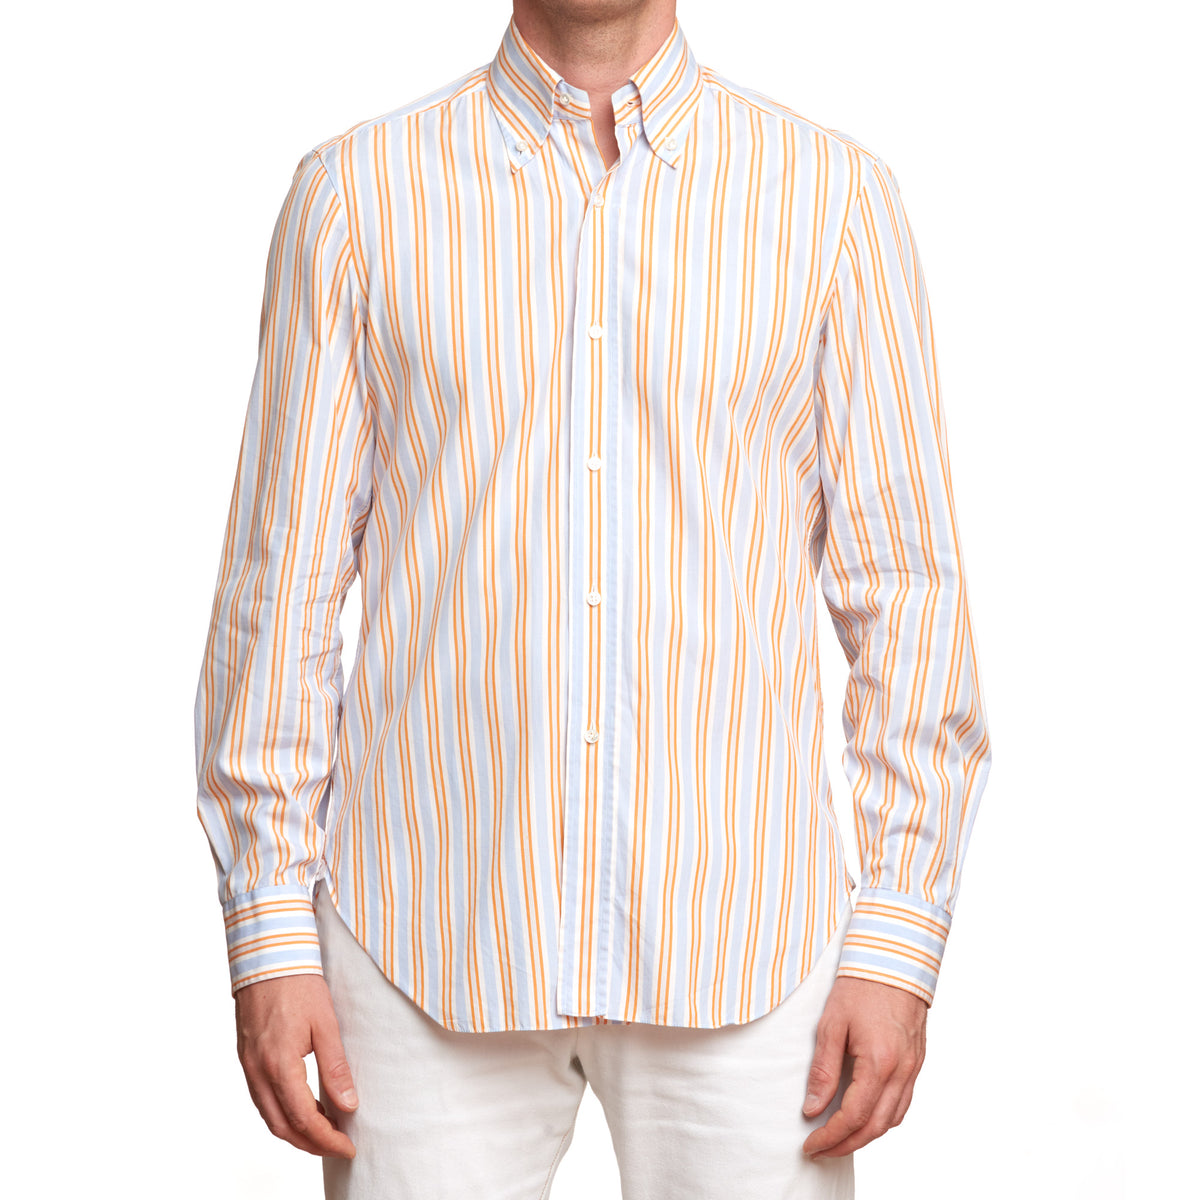 BARBA Handmade Multi-Color Striped Cotton Button-Down Shirt EU 40 US 15.75